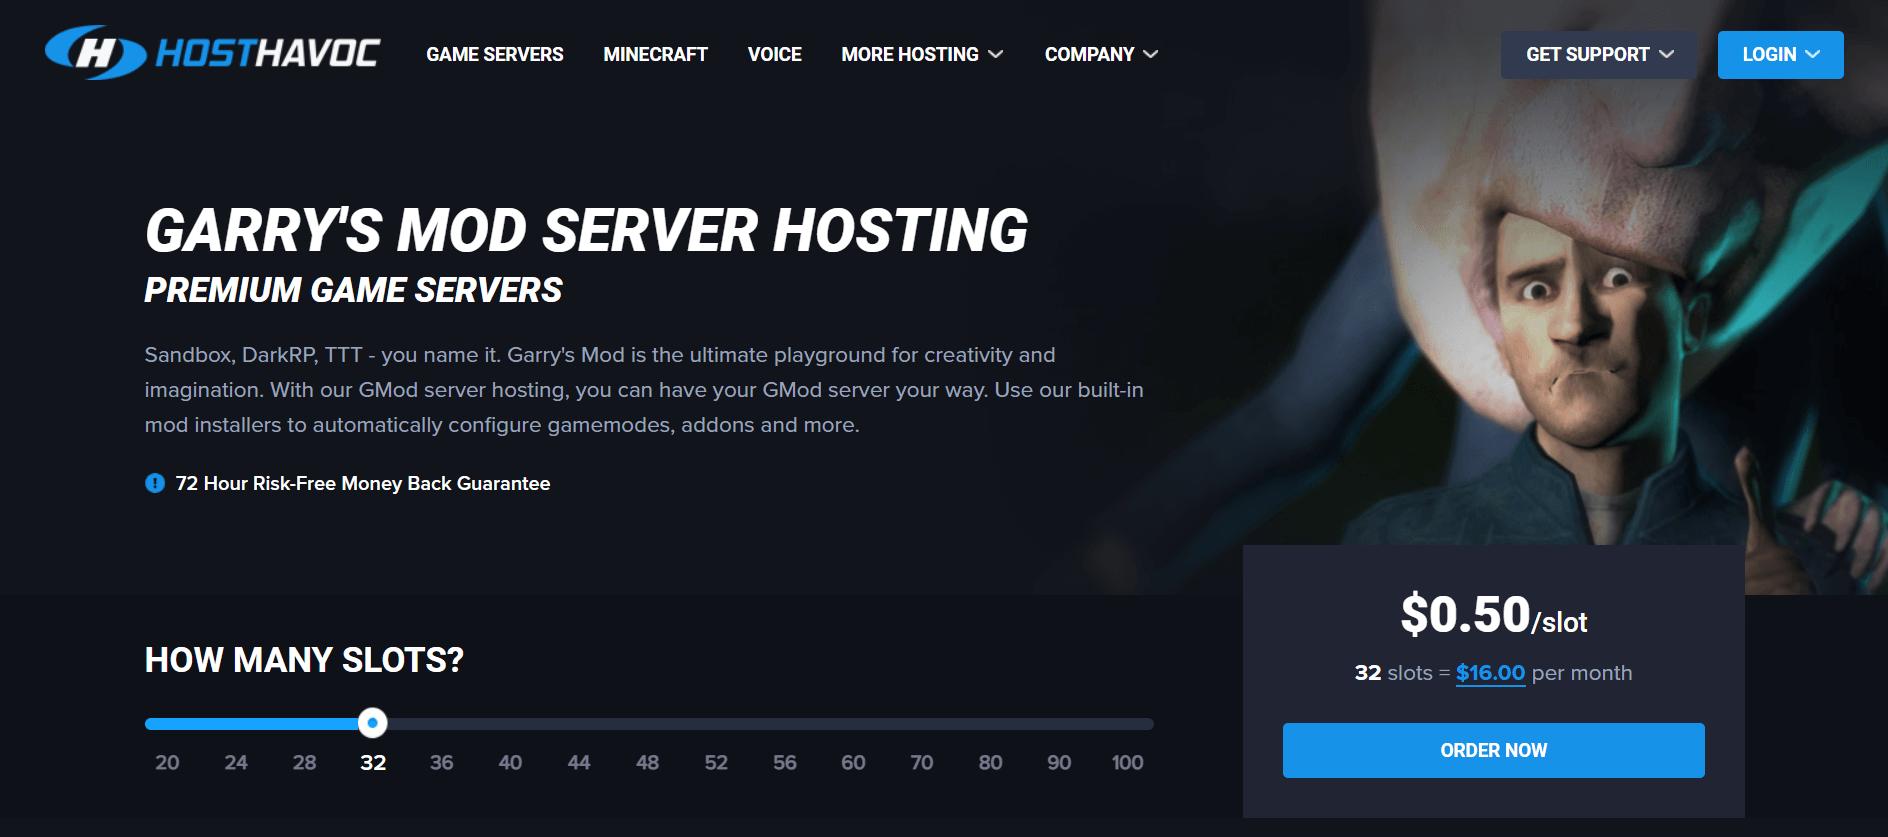 Host Havoc server hosting for Garry’s Mod